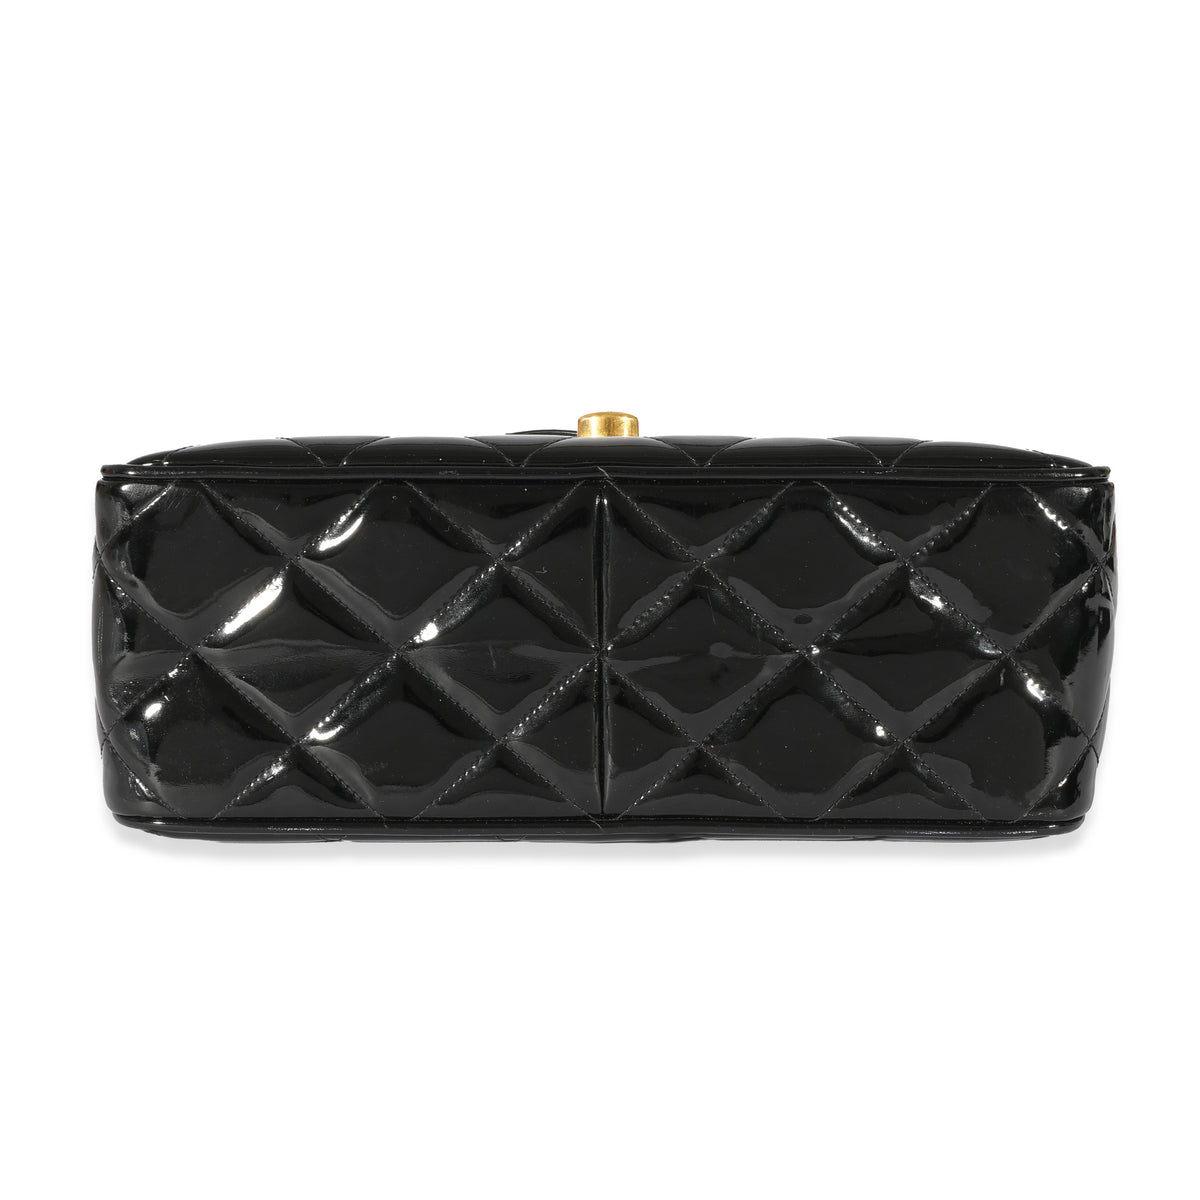 Chanel Black Patent Vintage XL CC Quilted Square Flap Bag